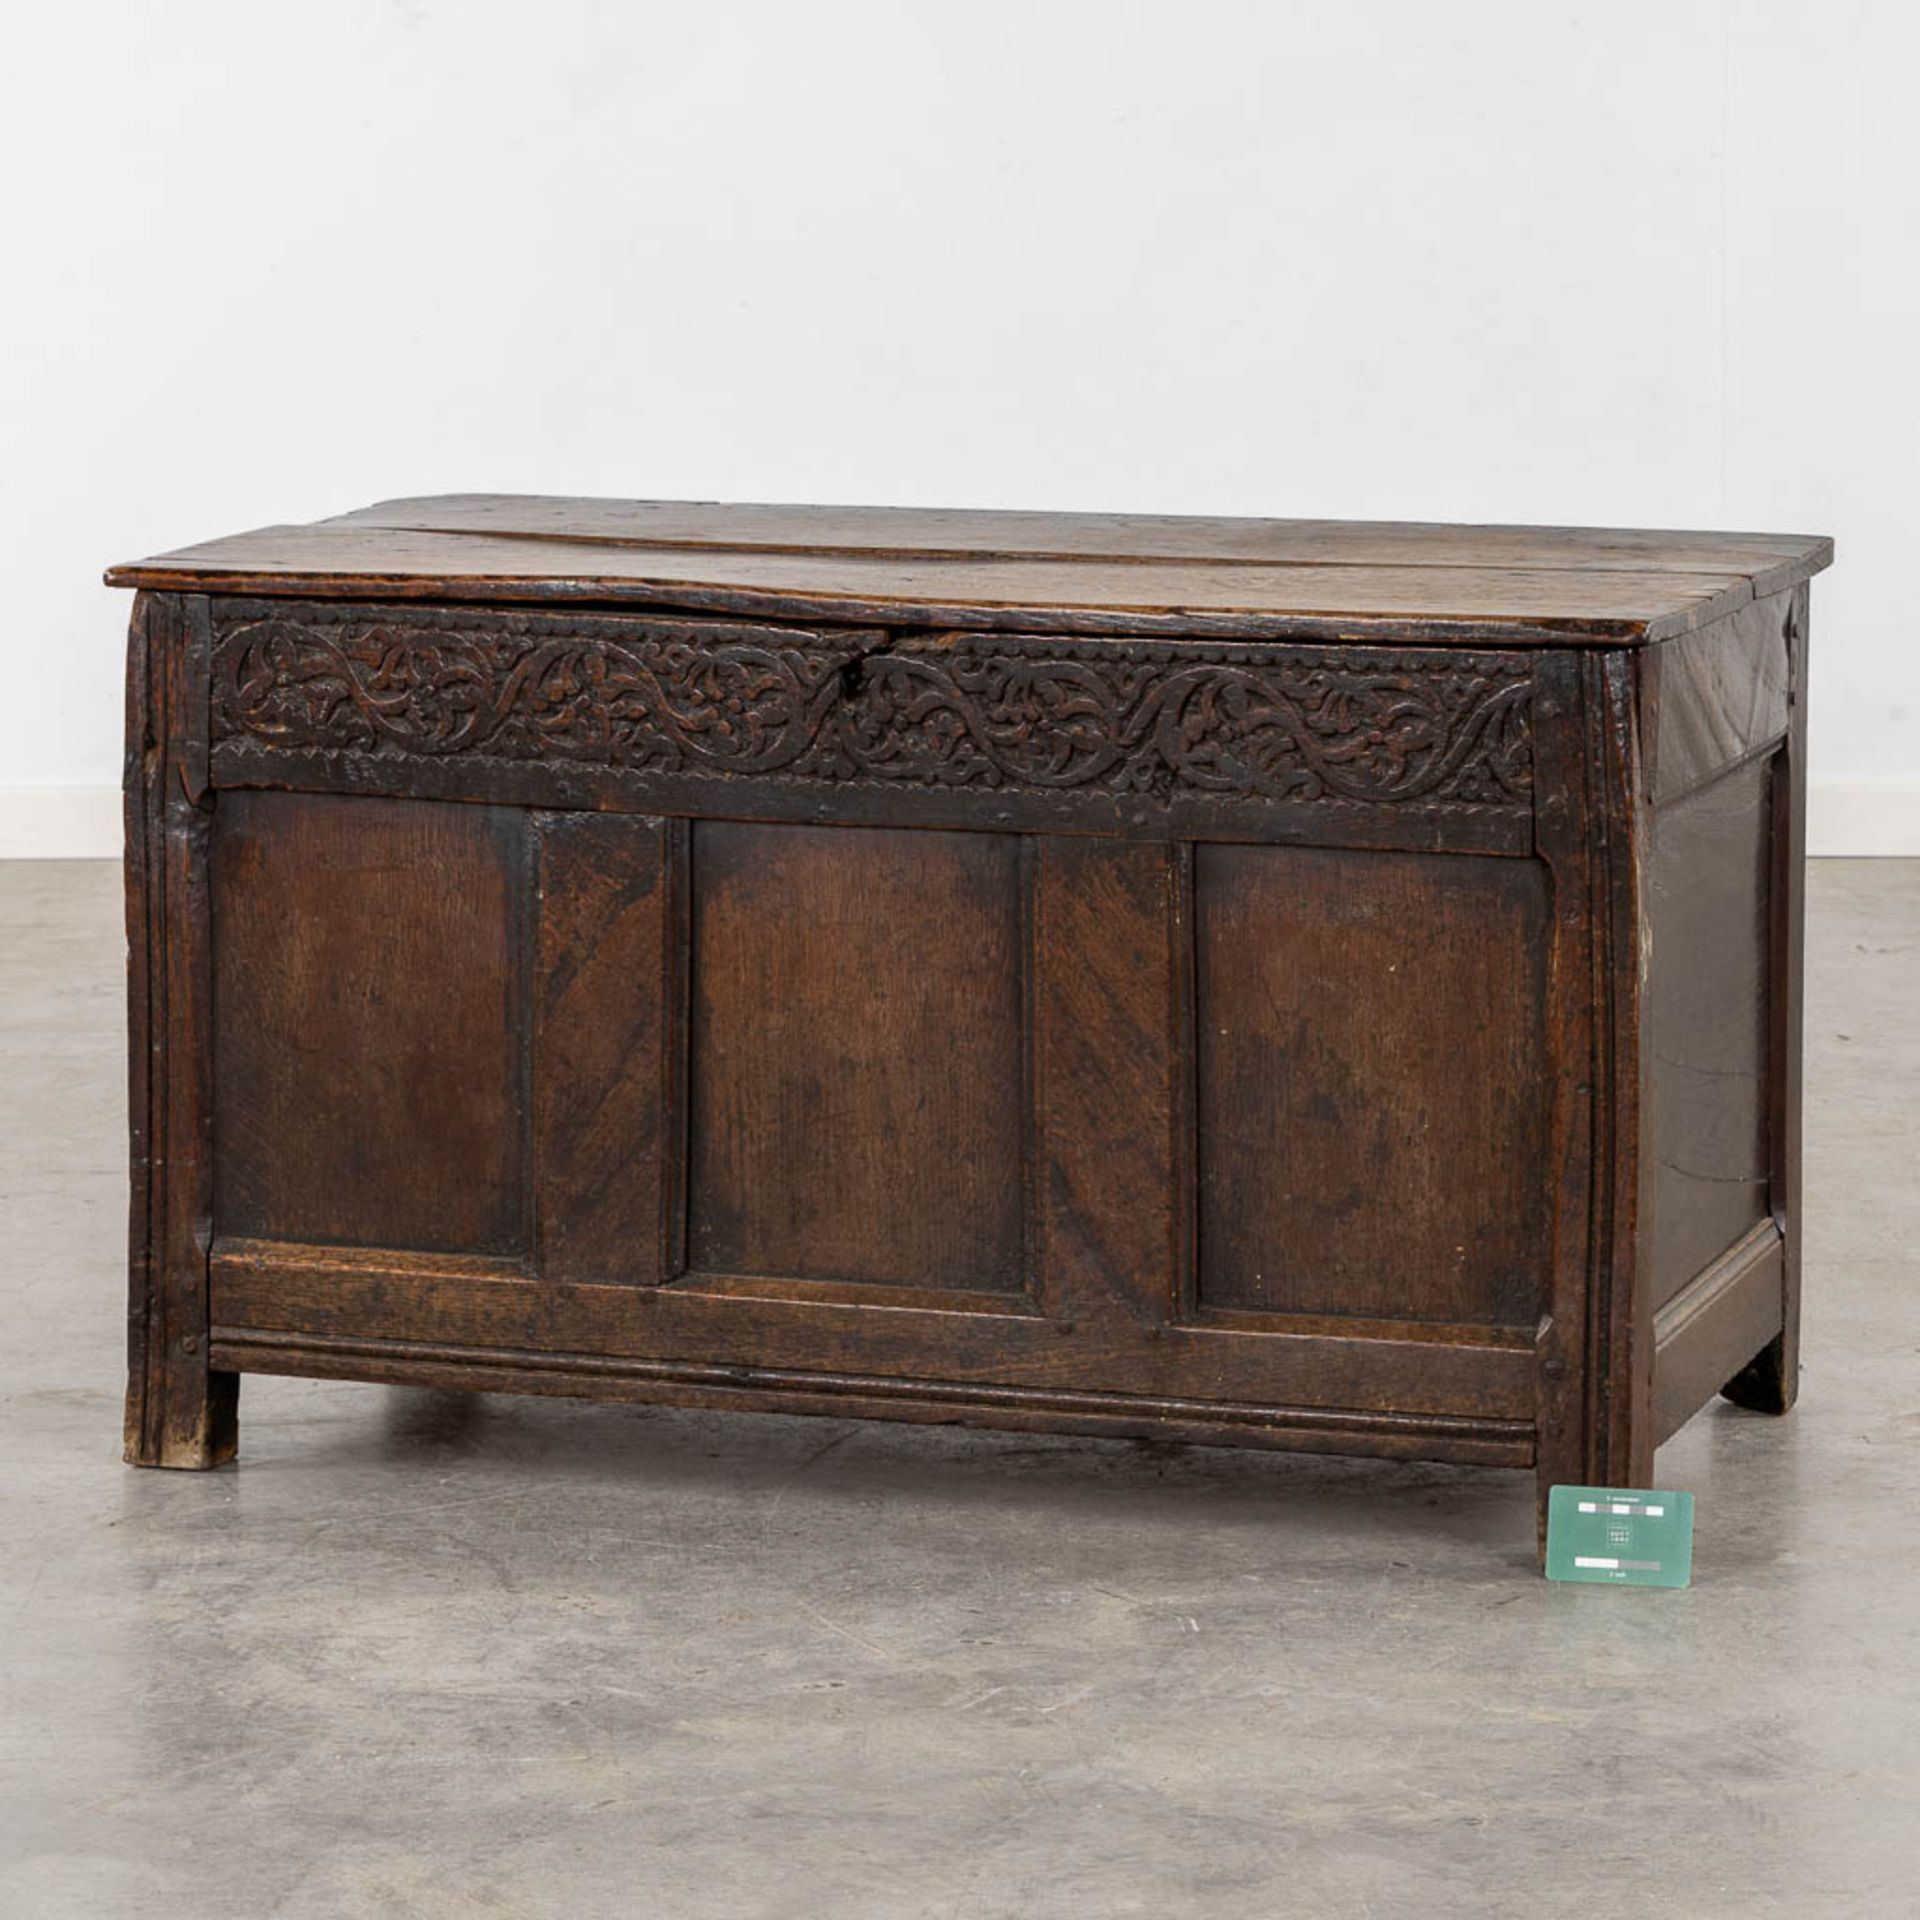 An antique wood-sculptured chest, 18th C. (L:52 x W:98 x H:56 cm) - Bild 2 aus 9